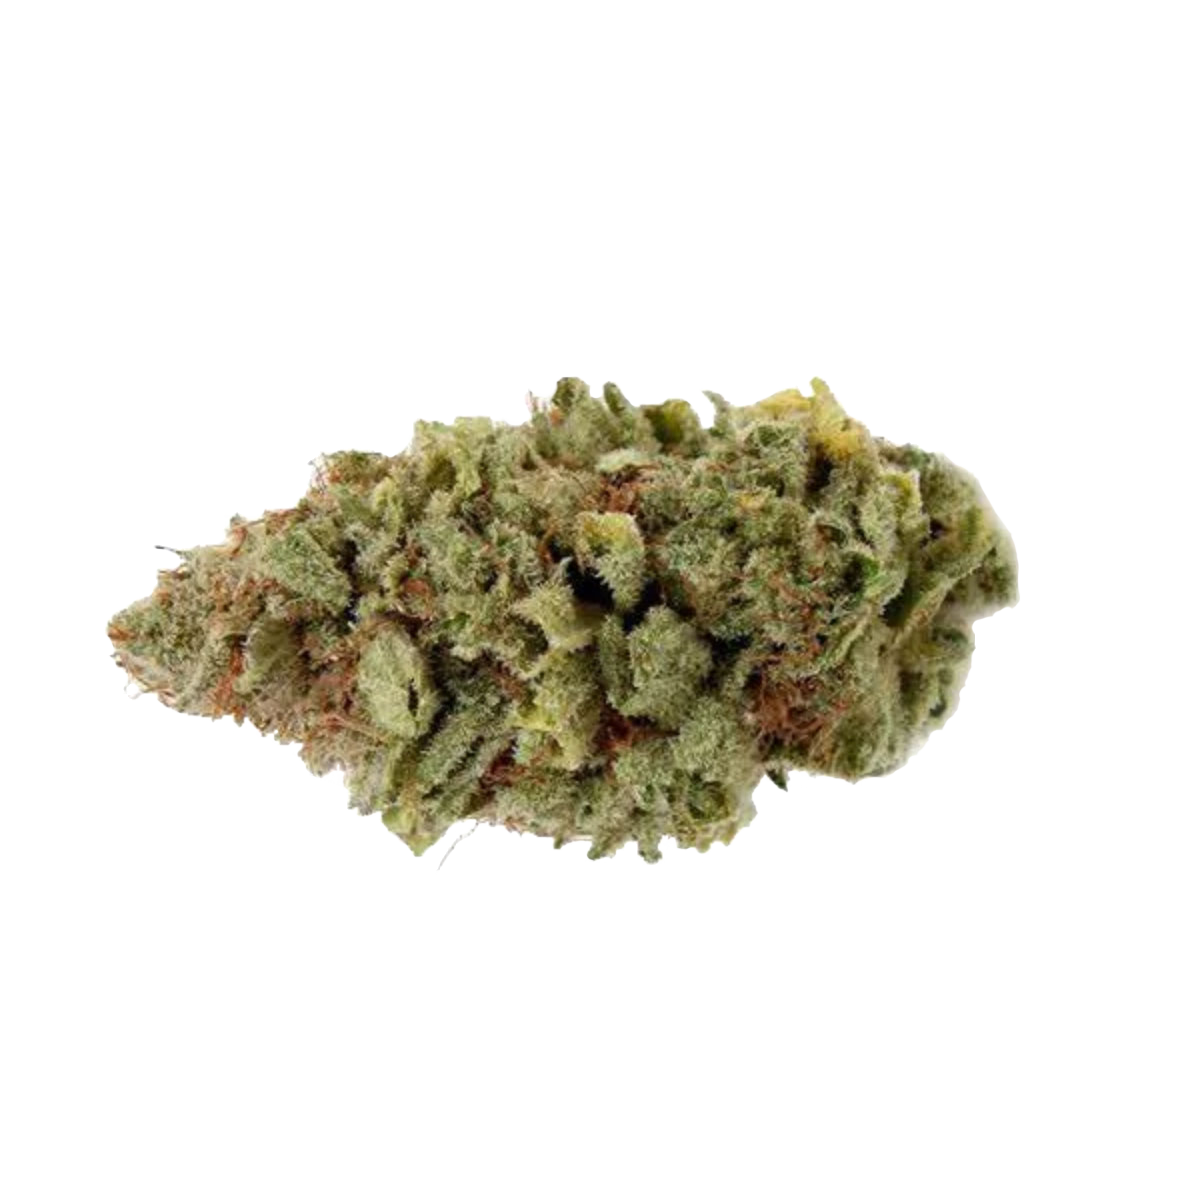 A nugget of violator kush marijuana from hotgrass.ca